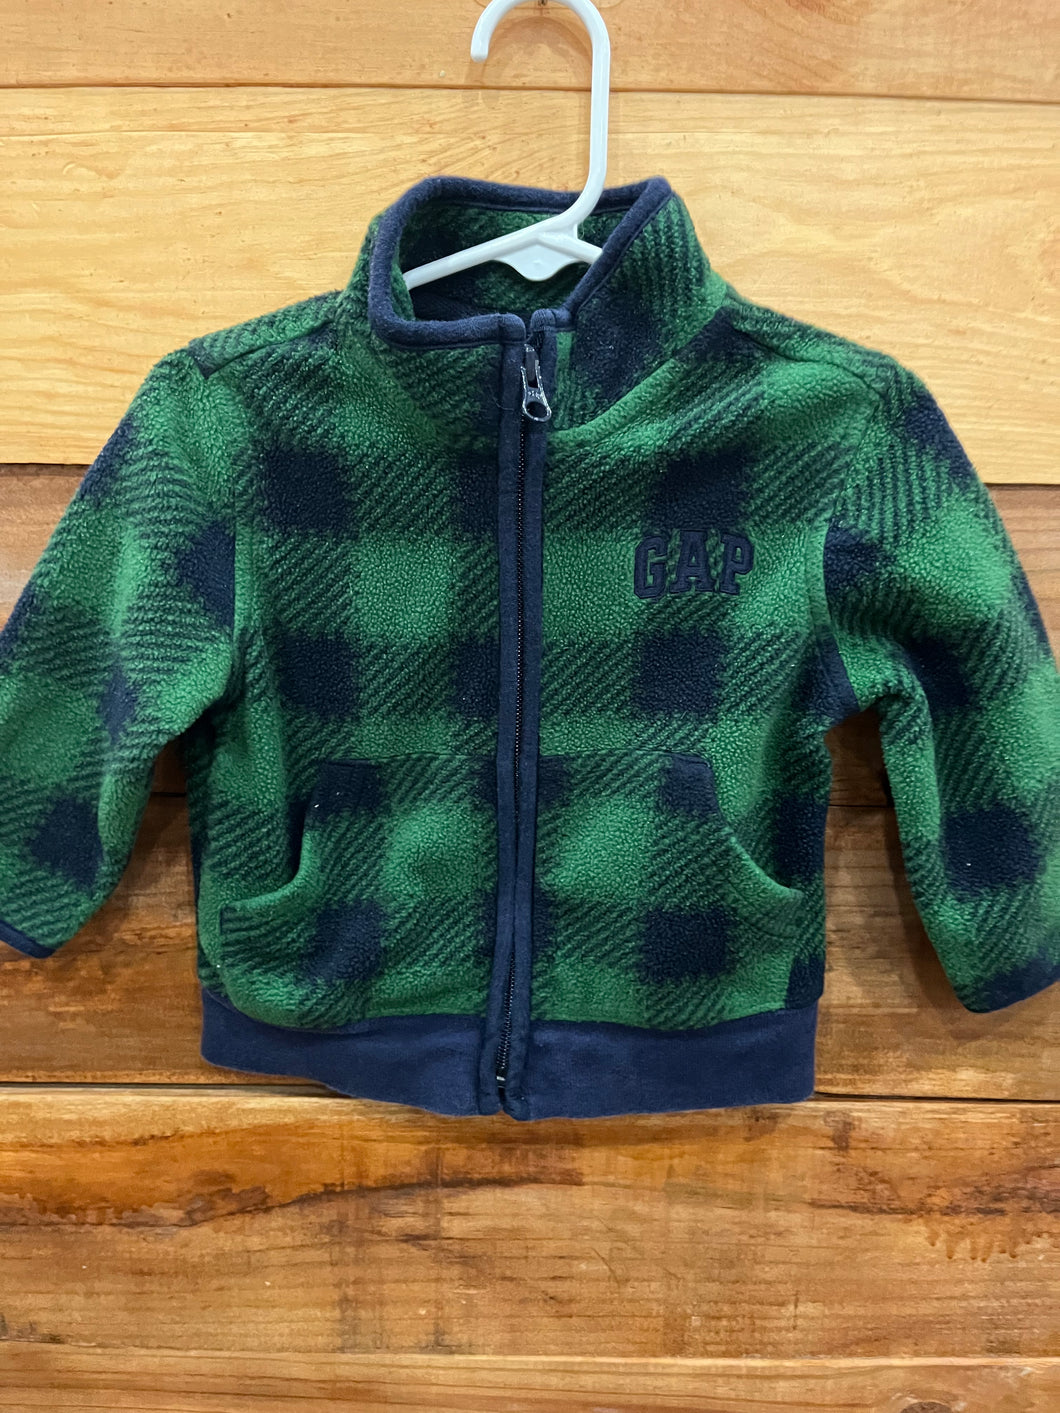 Gap Green & Blue Jacket Size 12-18m